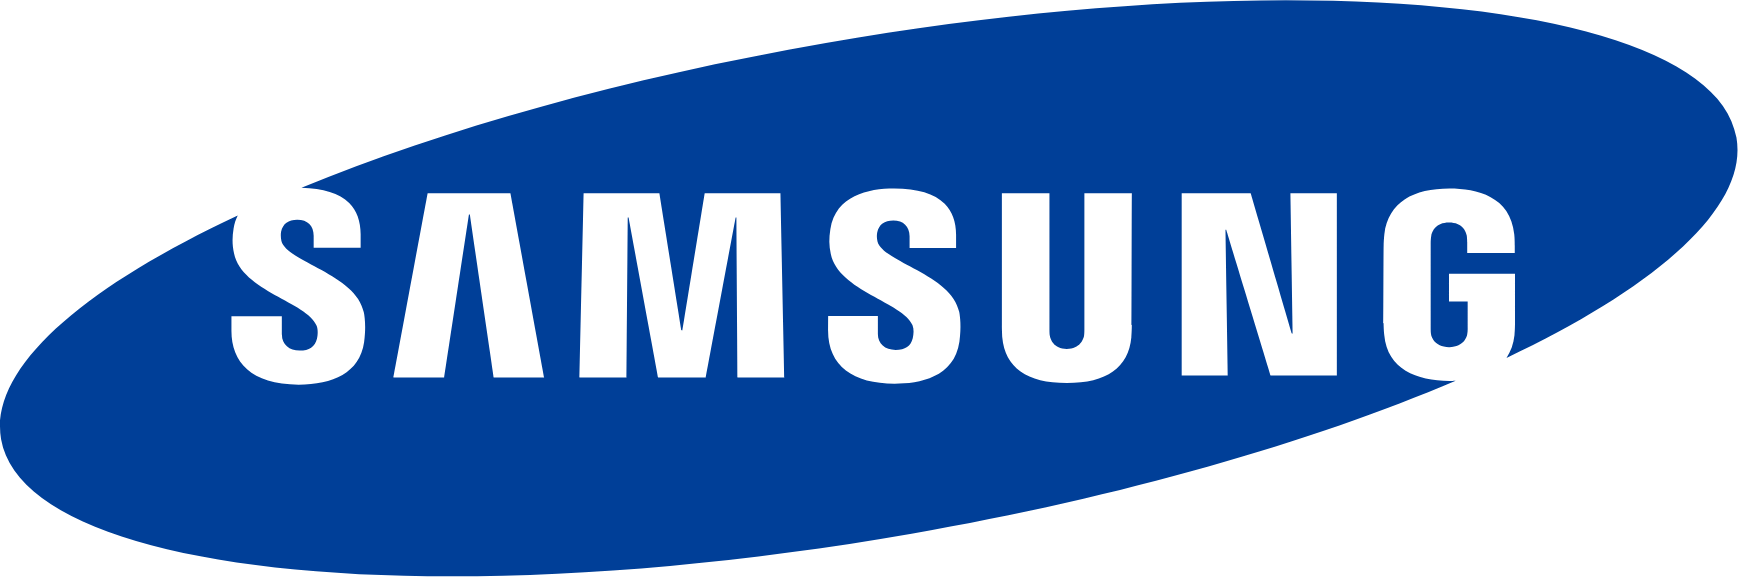 Samsung Life Insurance
 logo (PNG transparent)